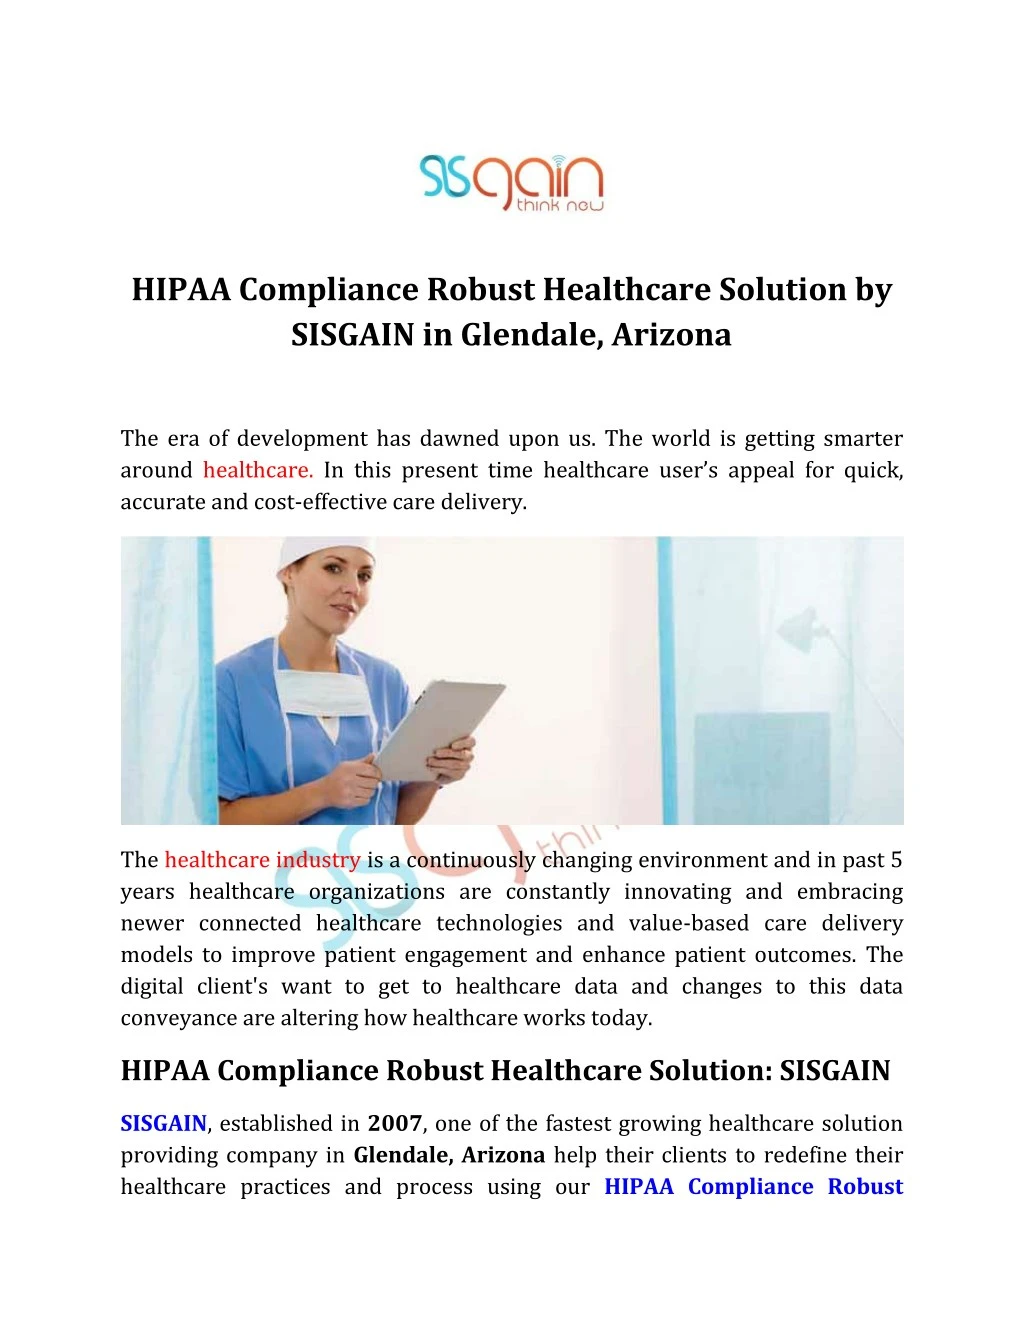 hipaa compliance robust healthcare solution